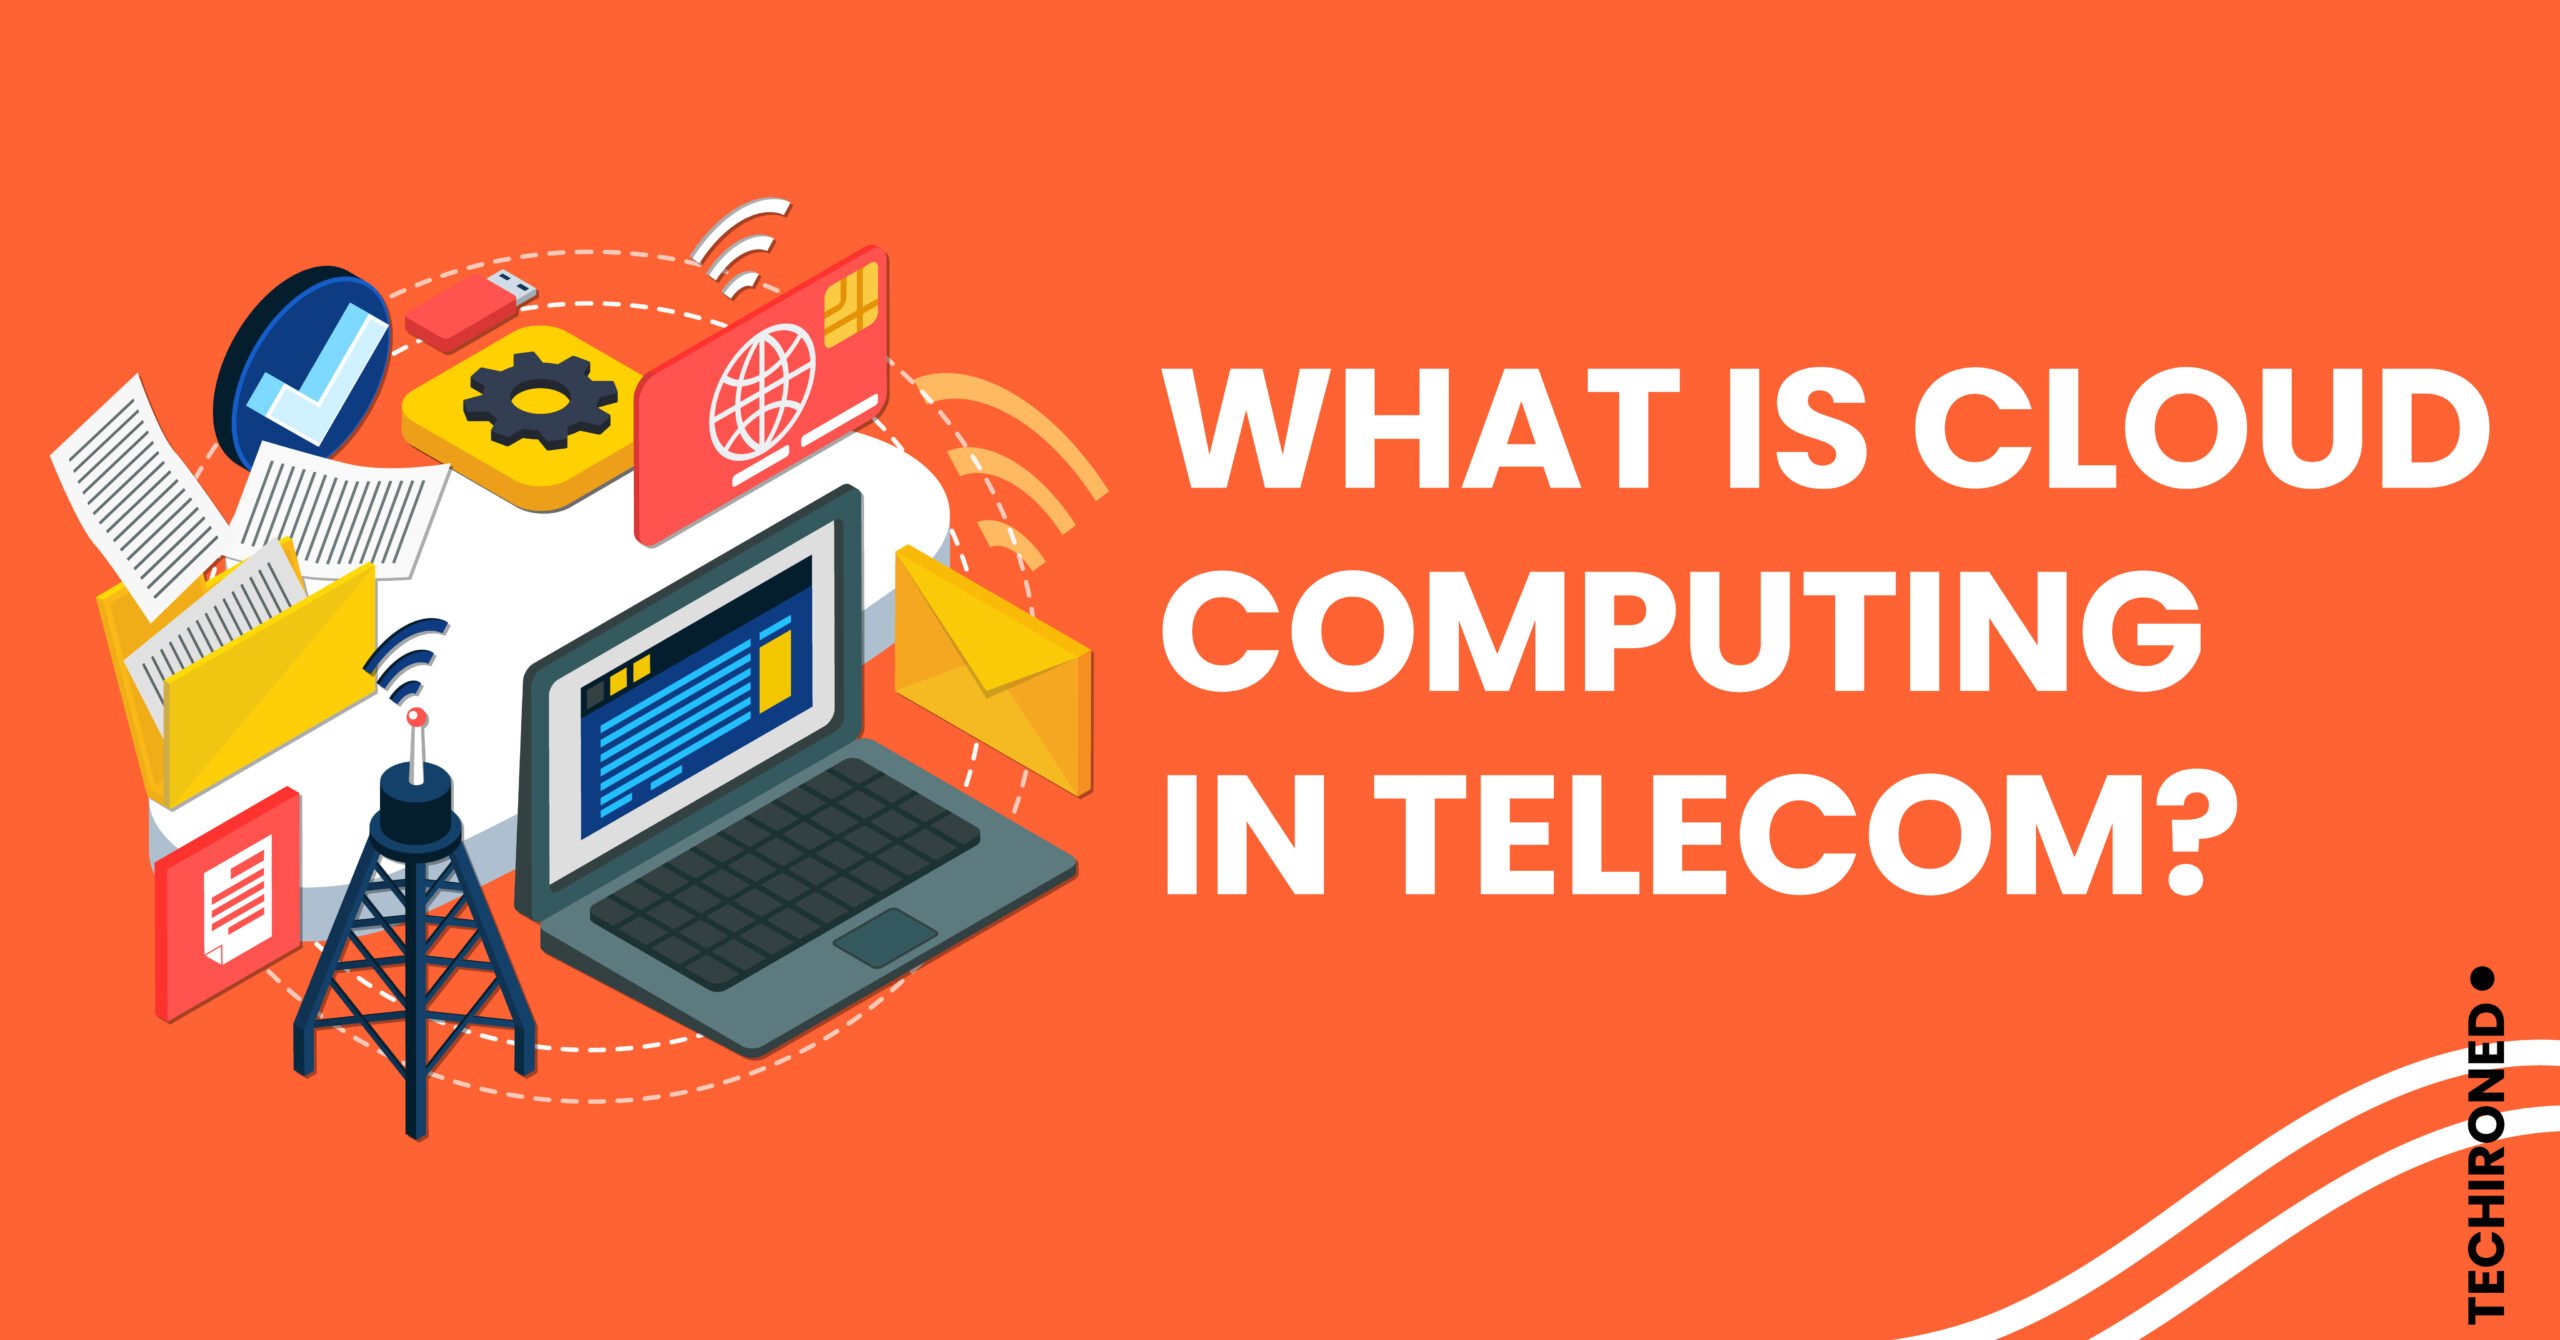 10 Benefits of cloud computing in telecom